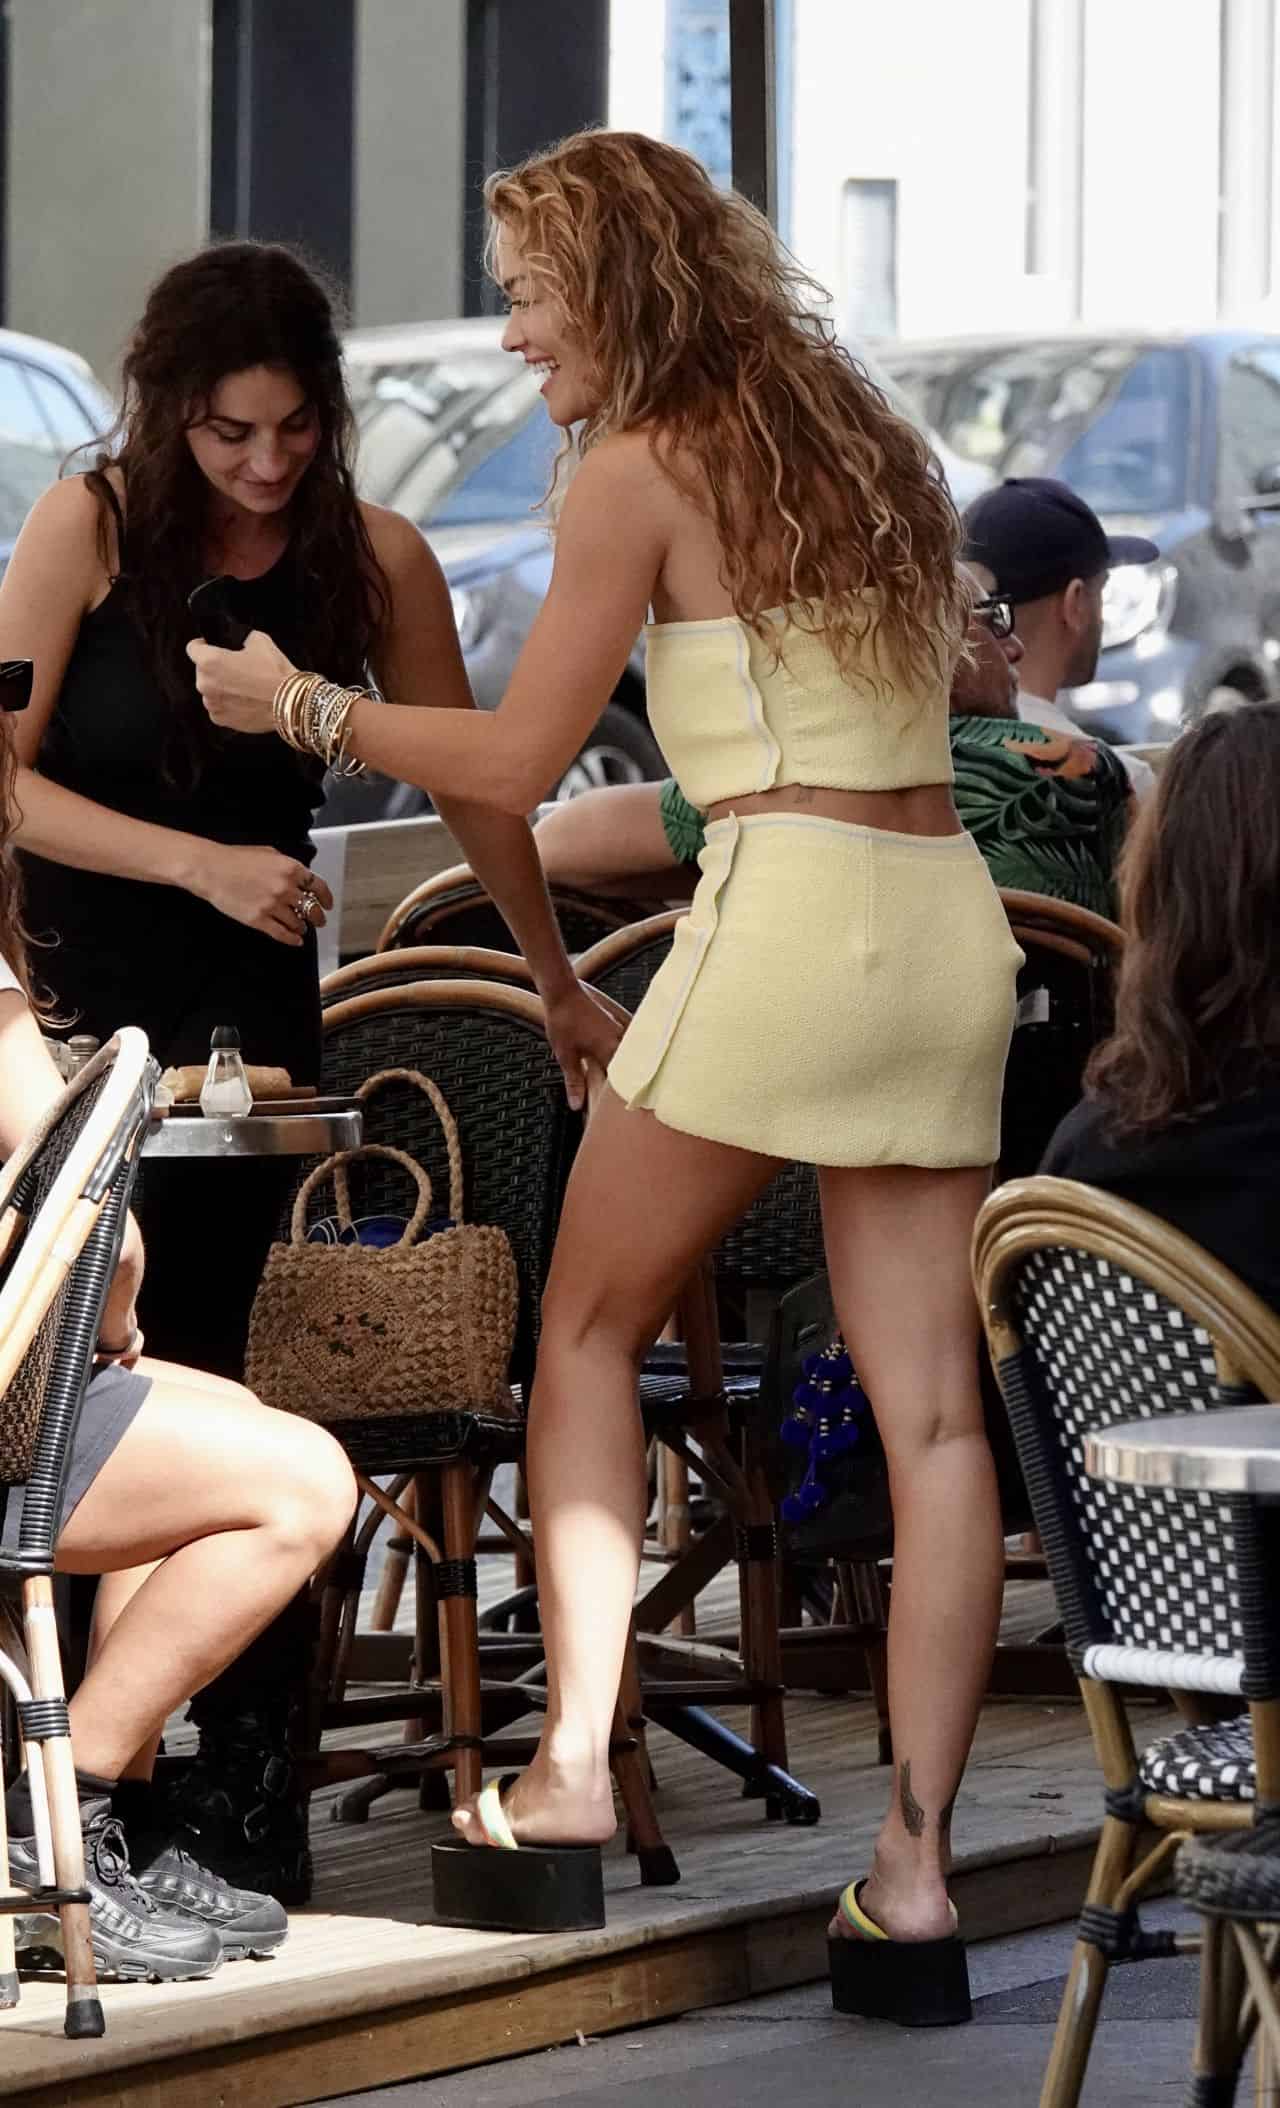 Rita Ora Radiates Beauty in a Chic Yellow Crop Top and Mini Skirt in Paris